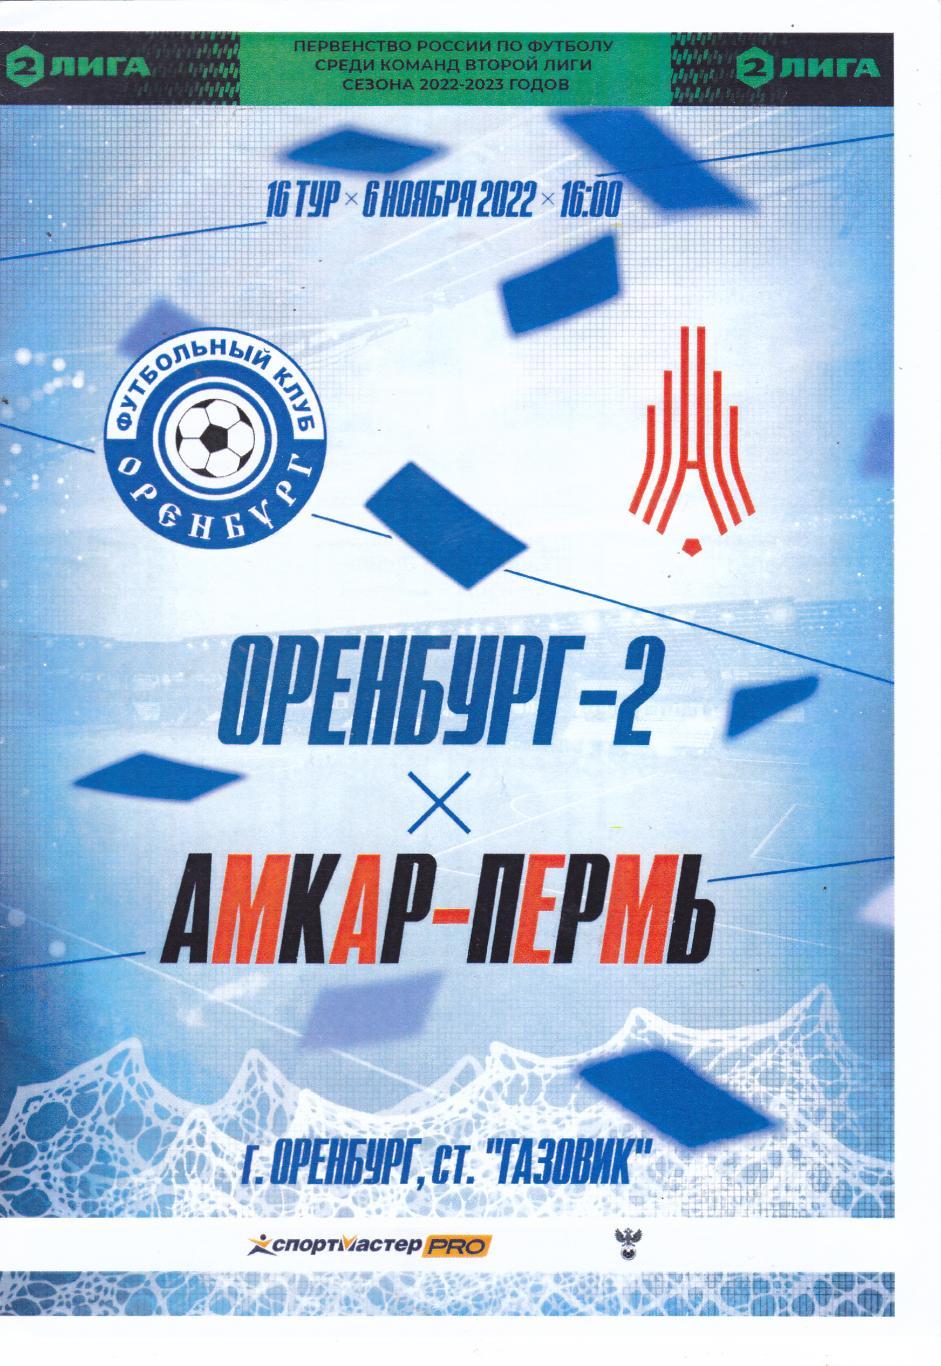 ФК Оренбург-2 - Амкар (Пермь) 06.11.2022